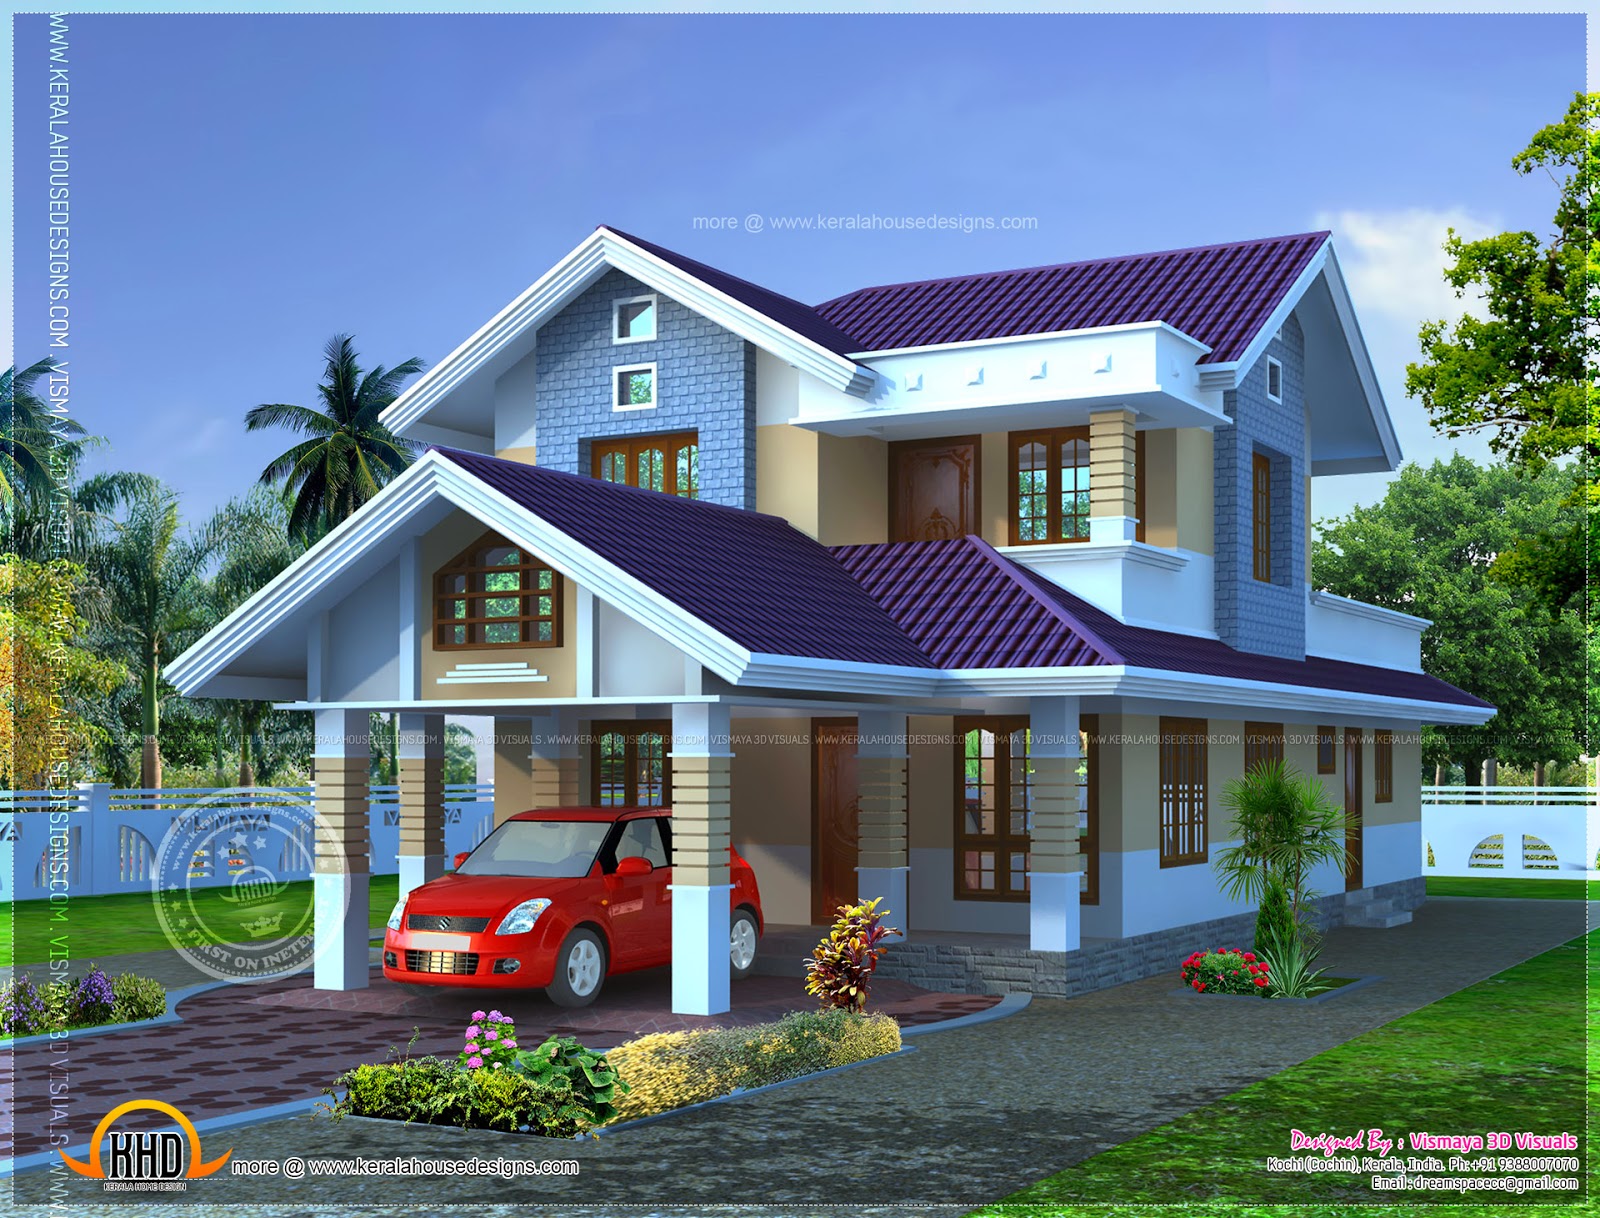  Narrow  lot  house  plan  Kerala home  design and floor plans  